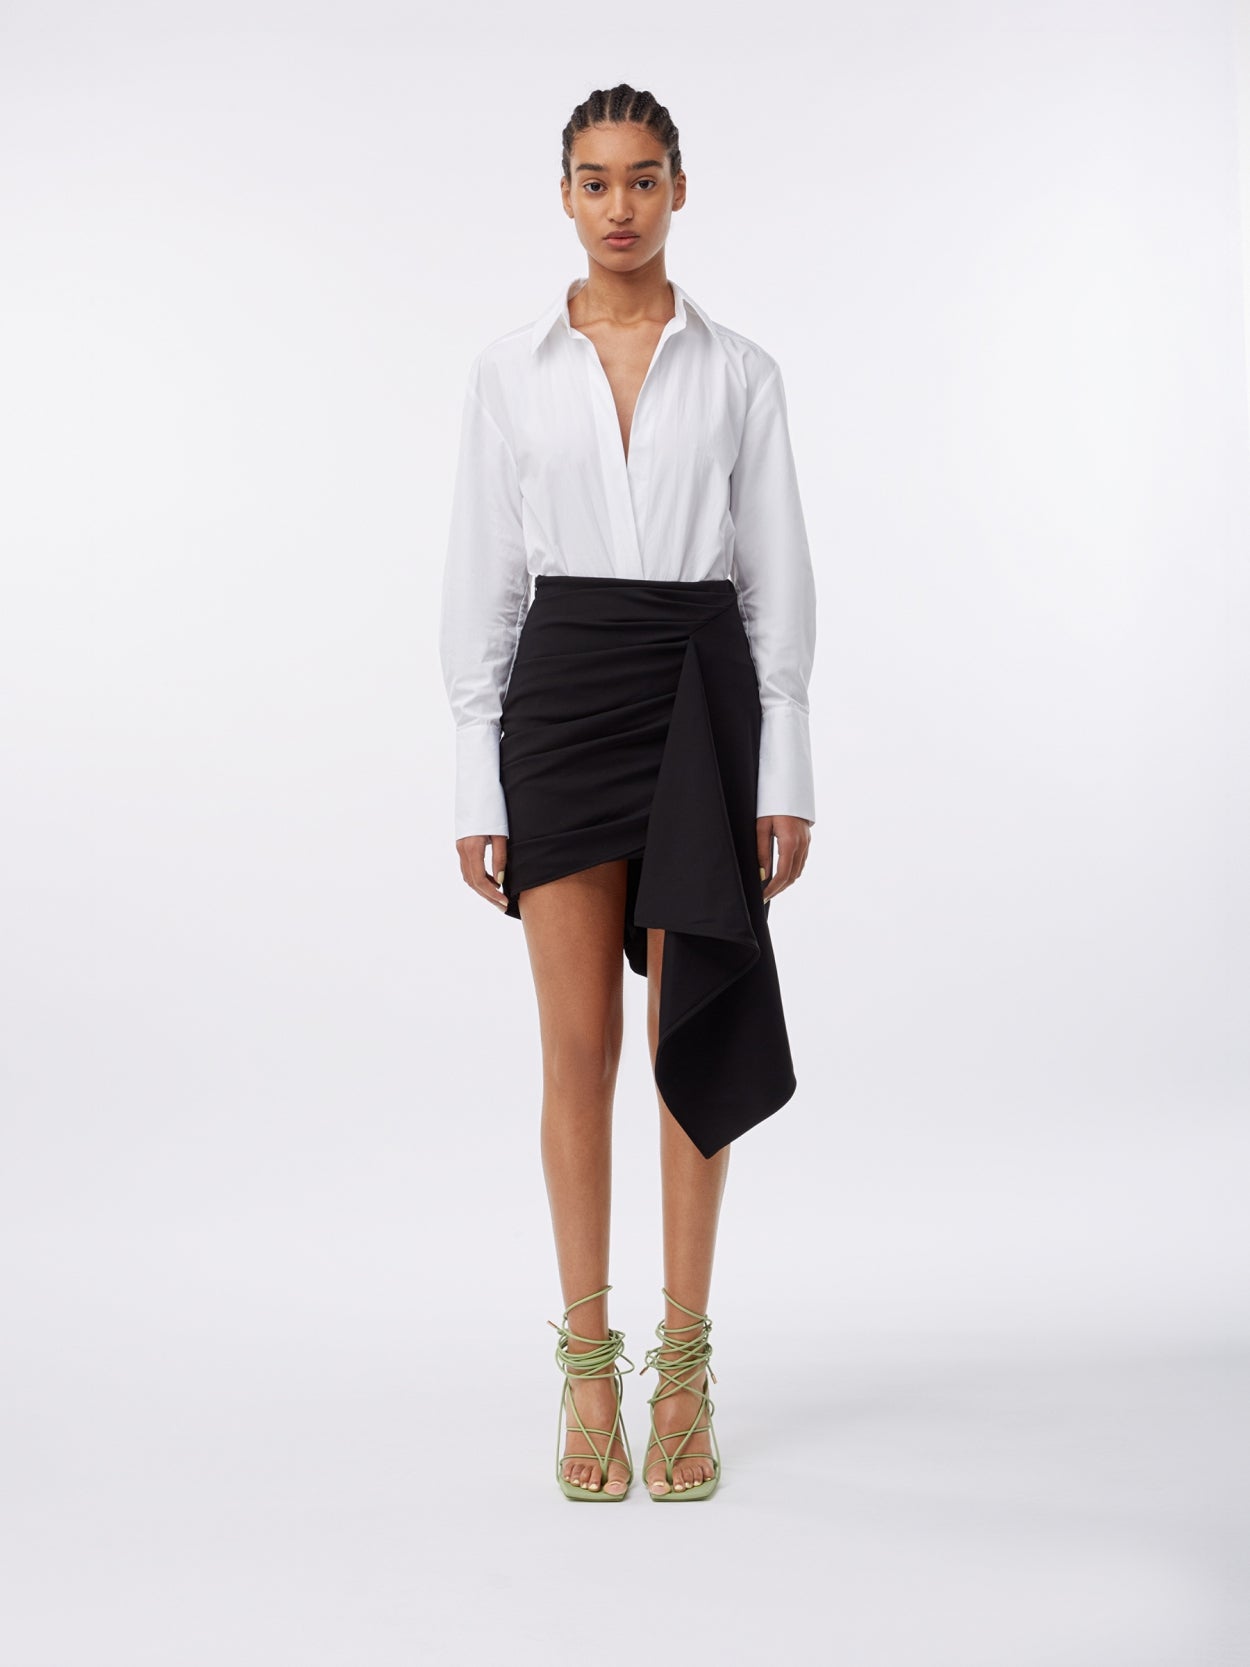 model wearing a white shirt bodysuit and a black asymmetric jersey draped skirt